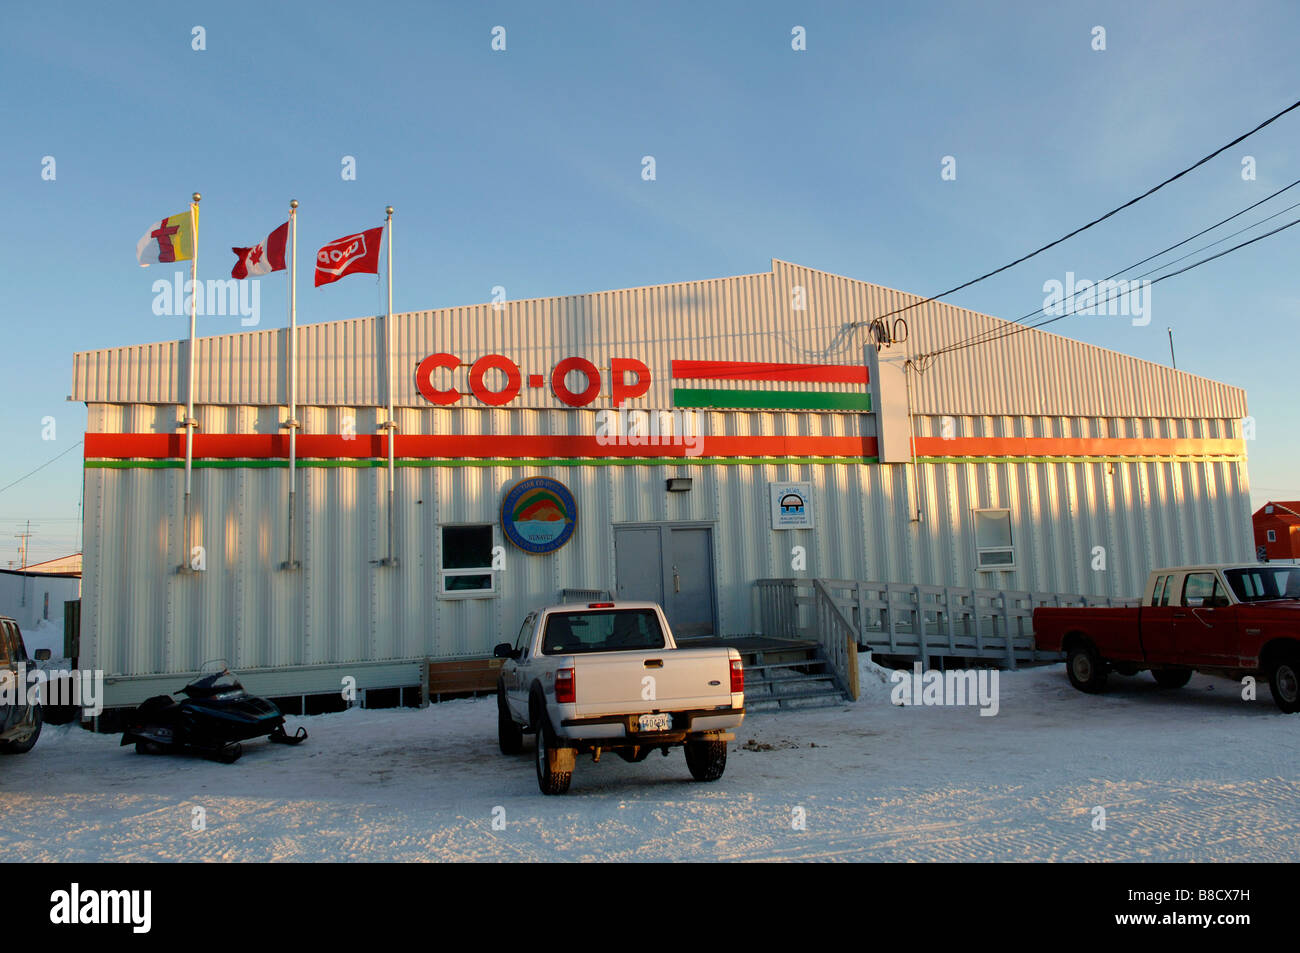 CO-OP Store  11 pm, Cambridge Bay, Nunavut Stock Photo